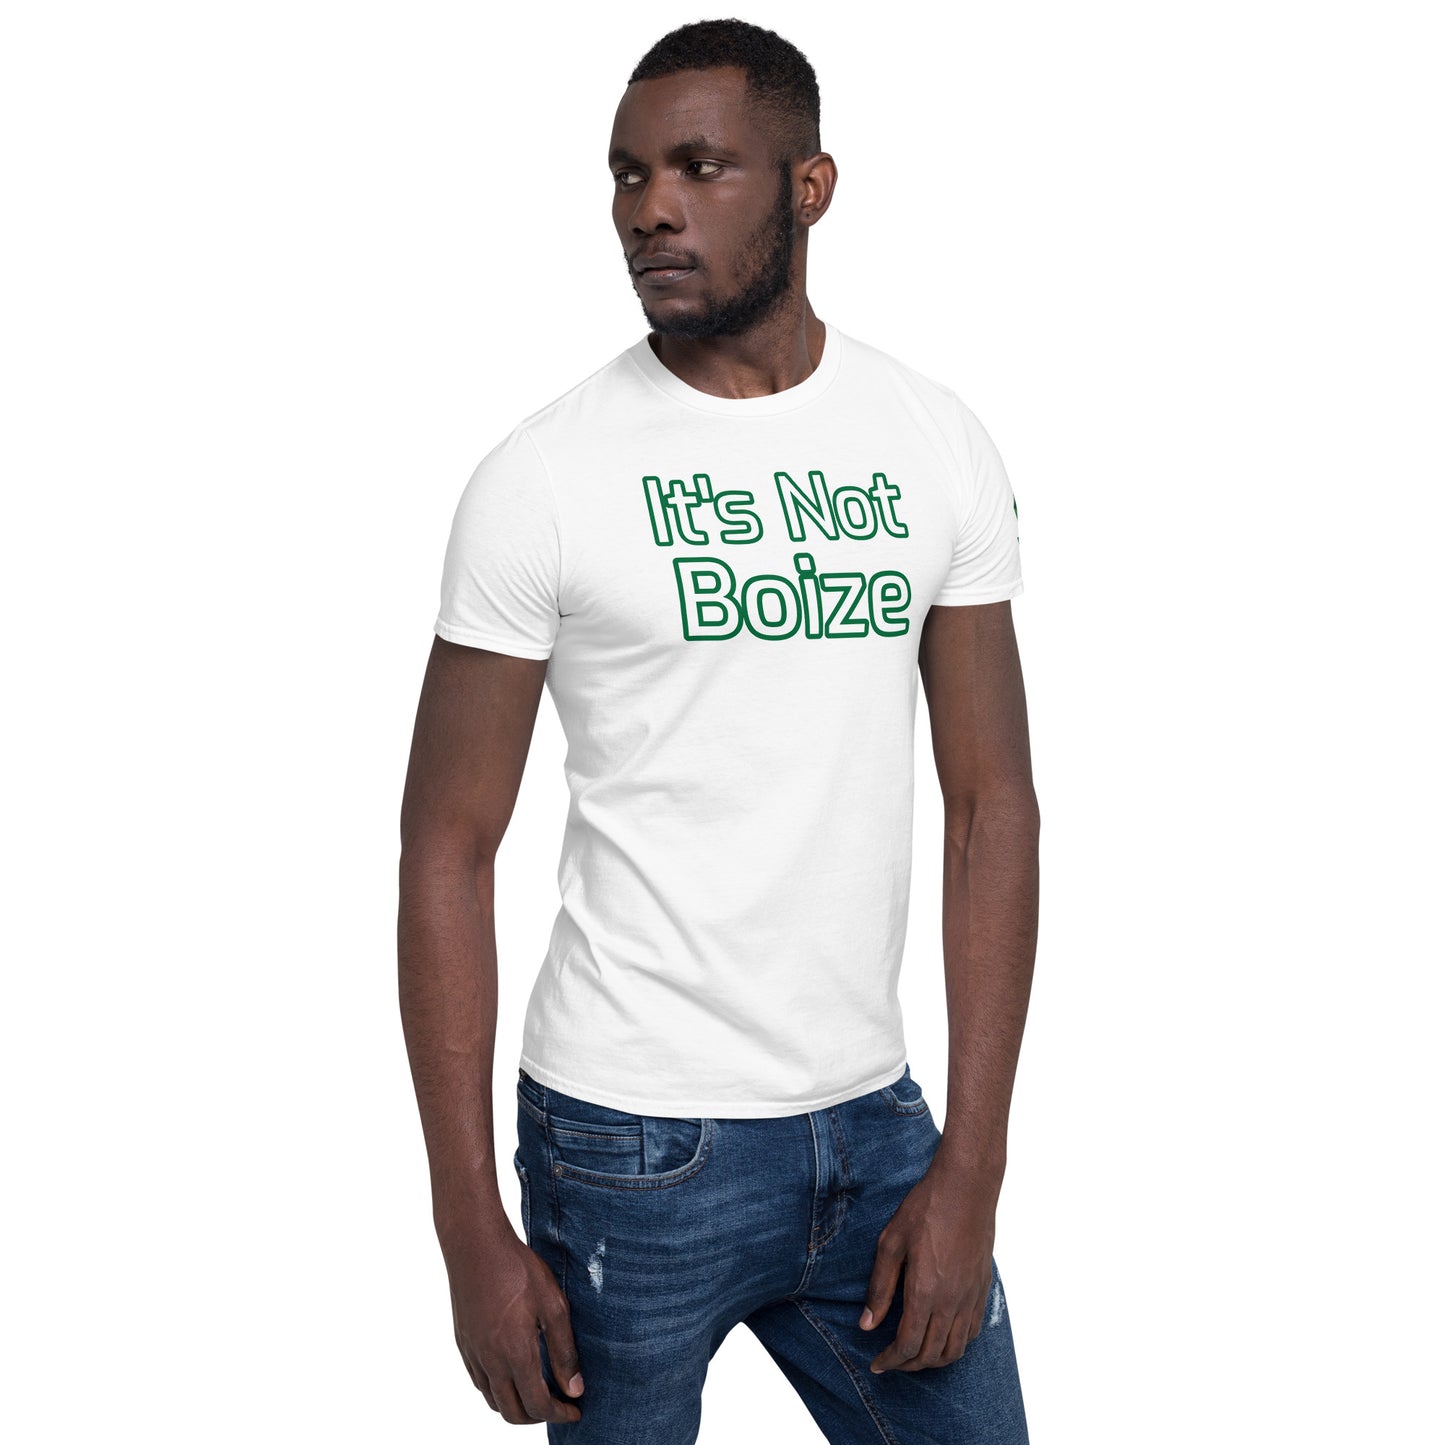 Not Boize Short-Sleeve Unisex T-Shirt